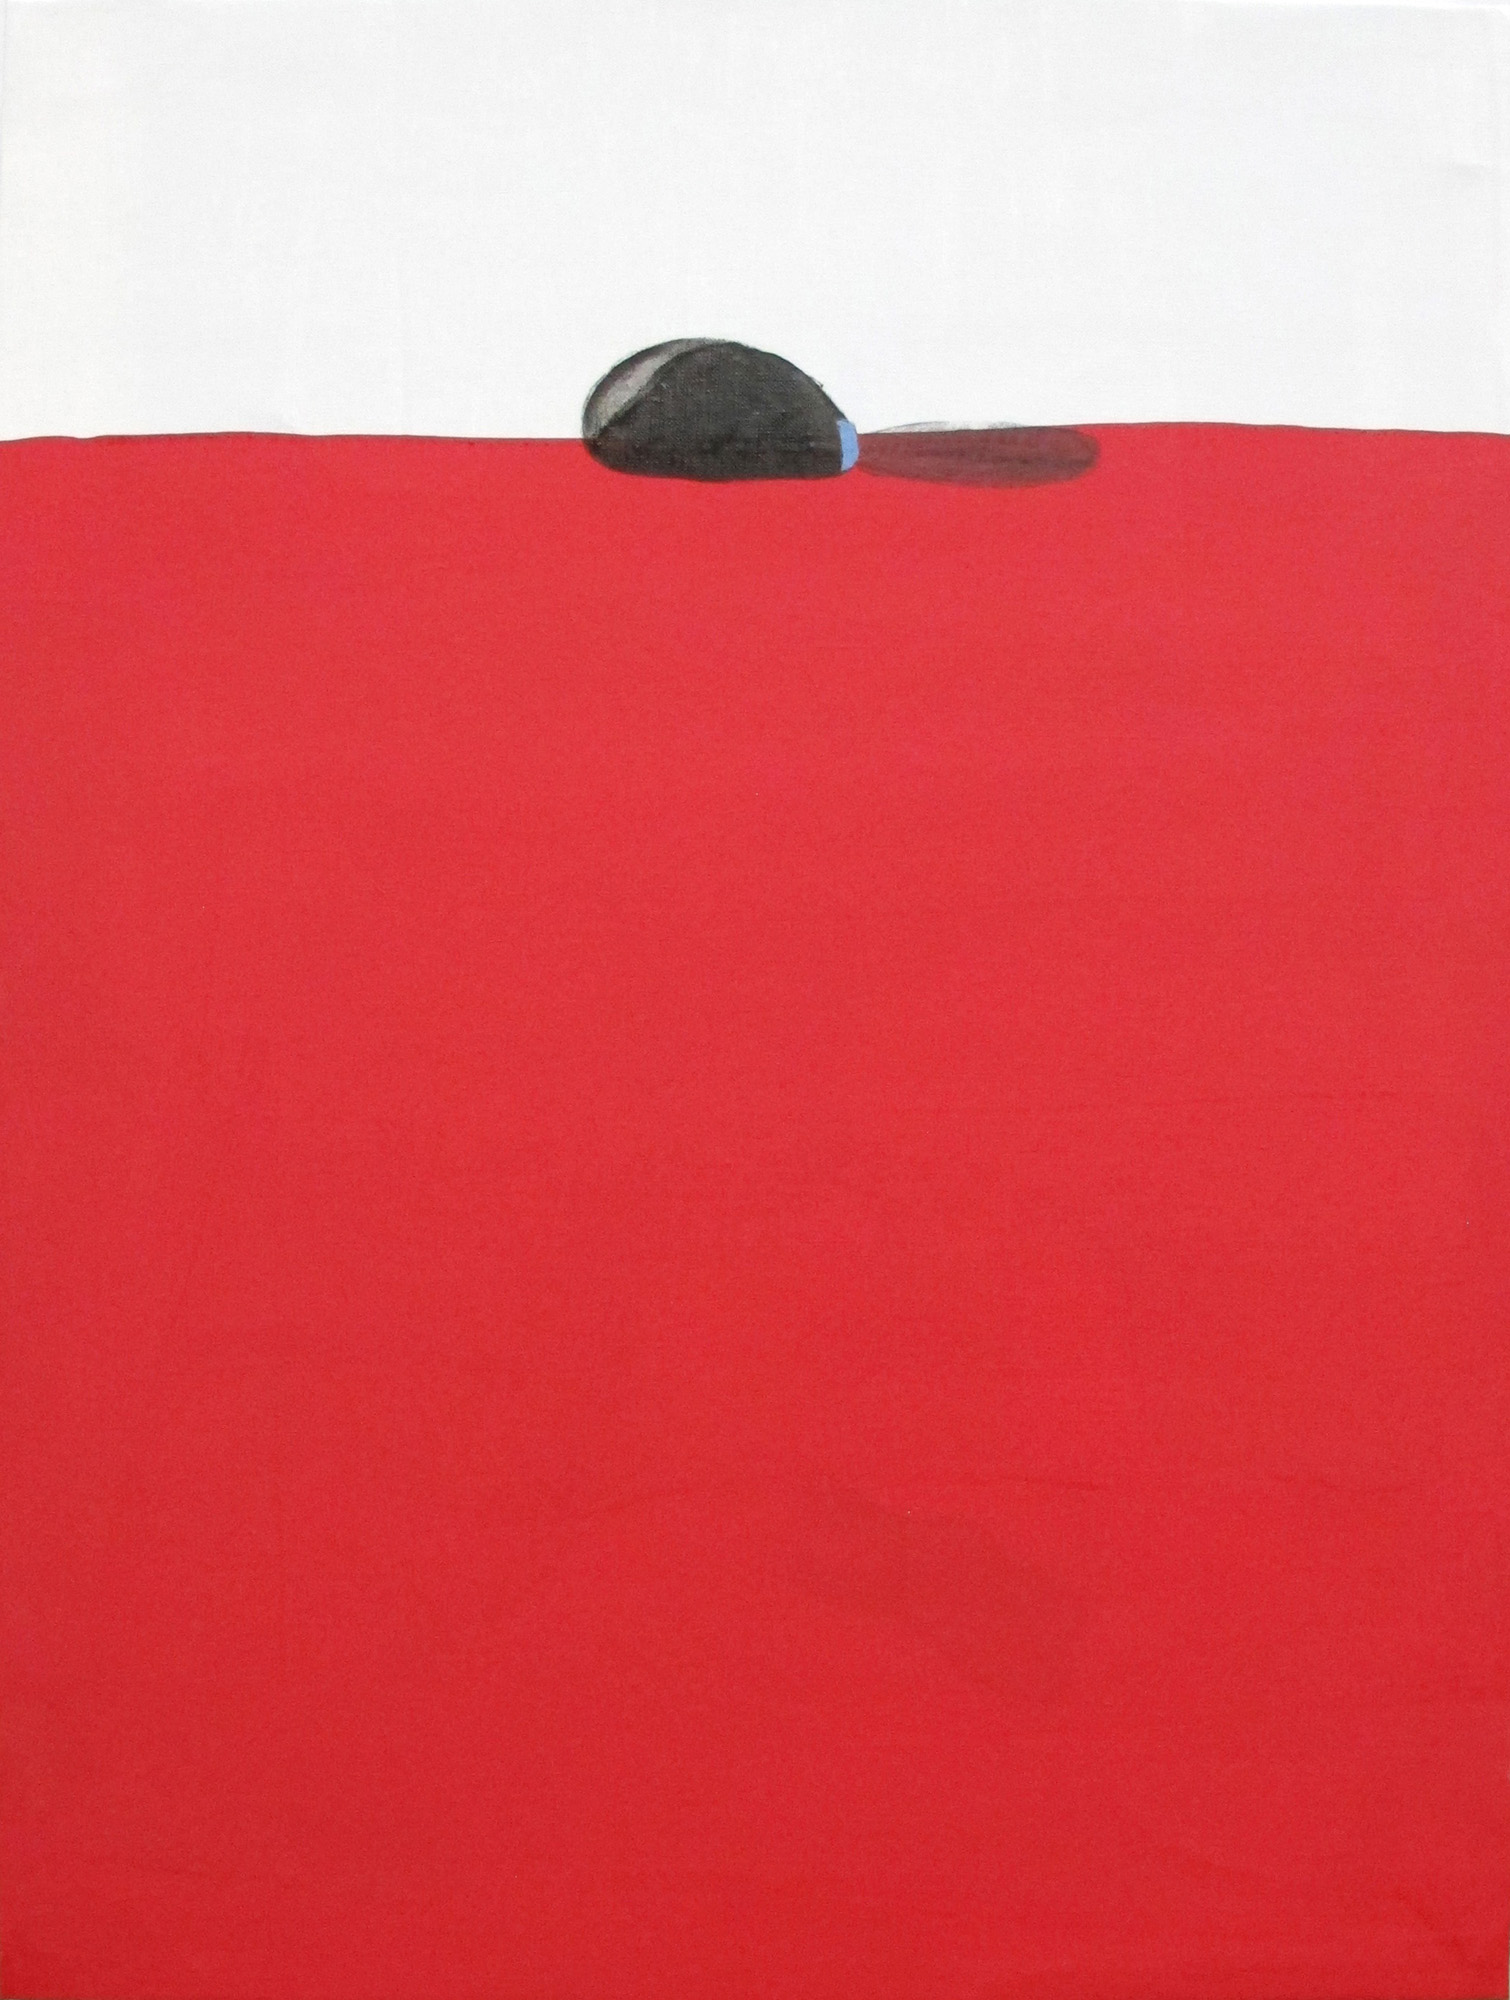 Horizonte Pezón, 2011, mixed media on canvas, 80 x 61 cm.